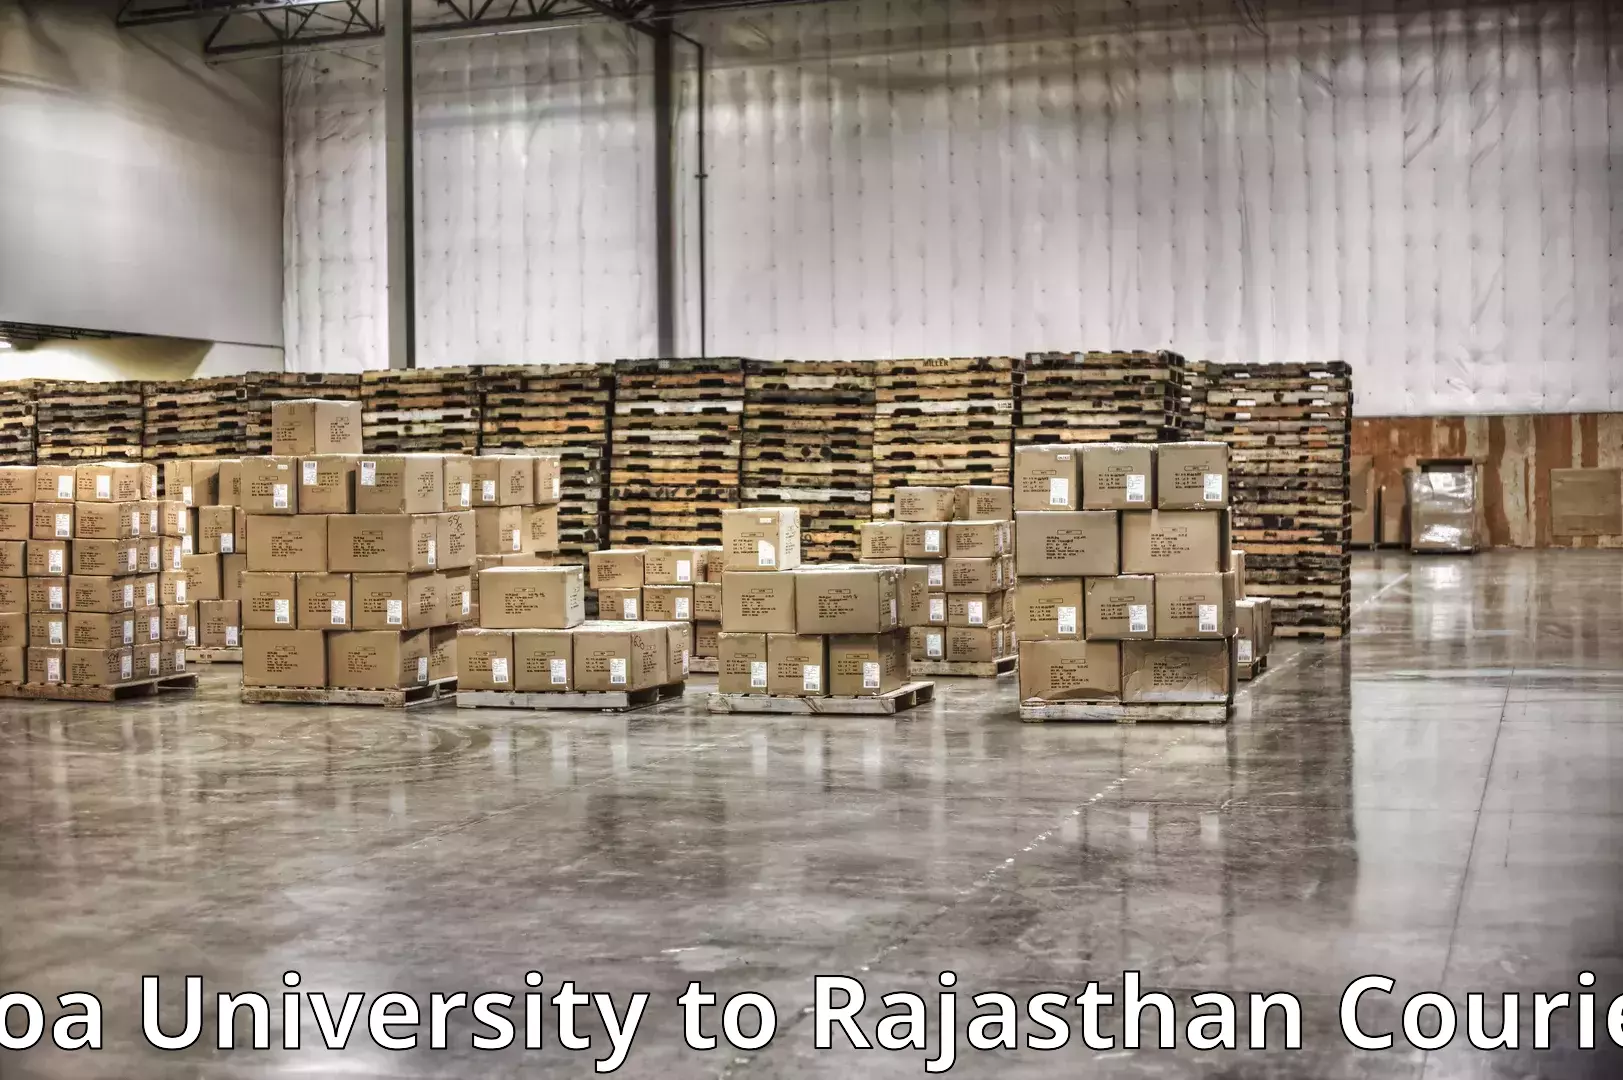 Professional moving company Goa University to Sidhmukh